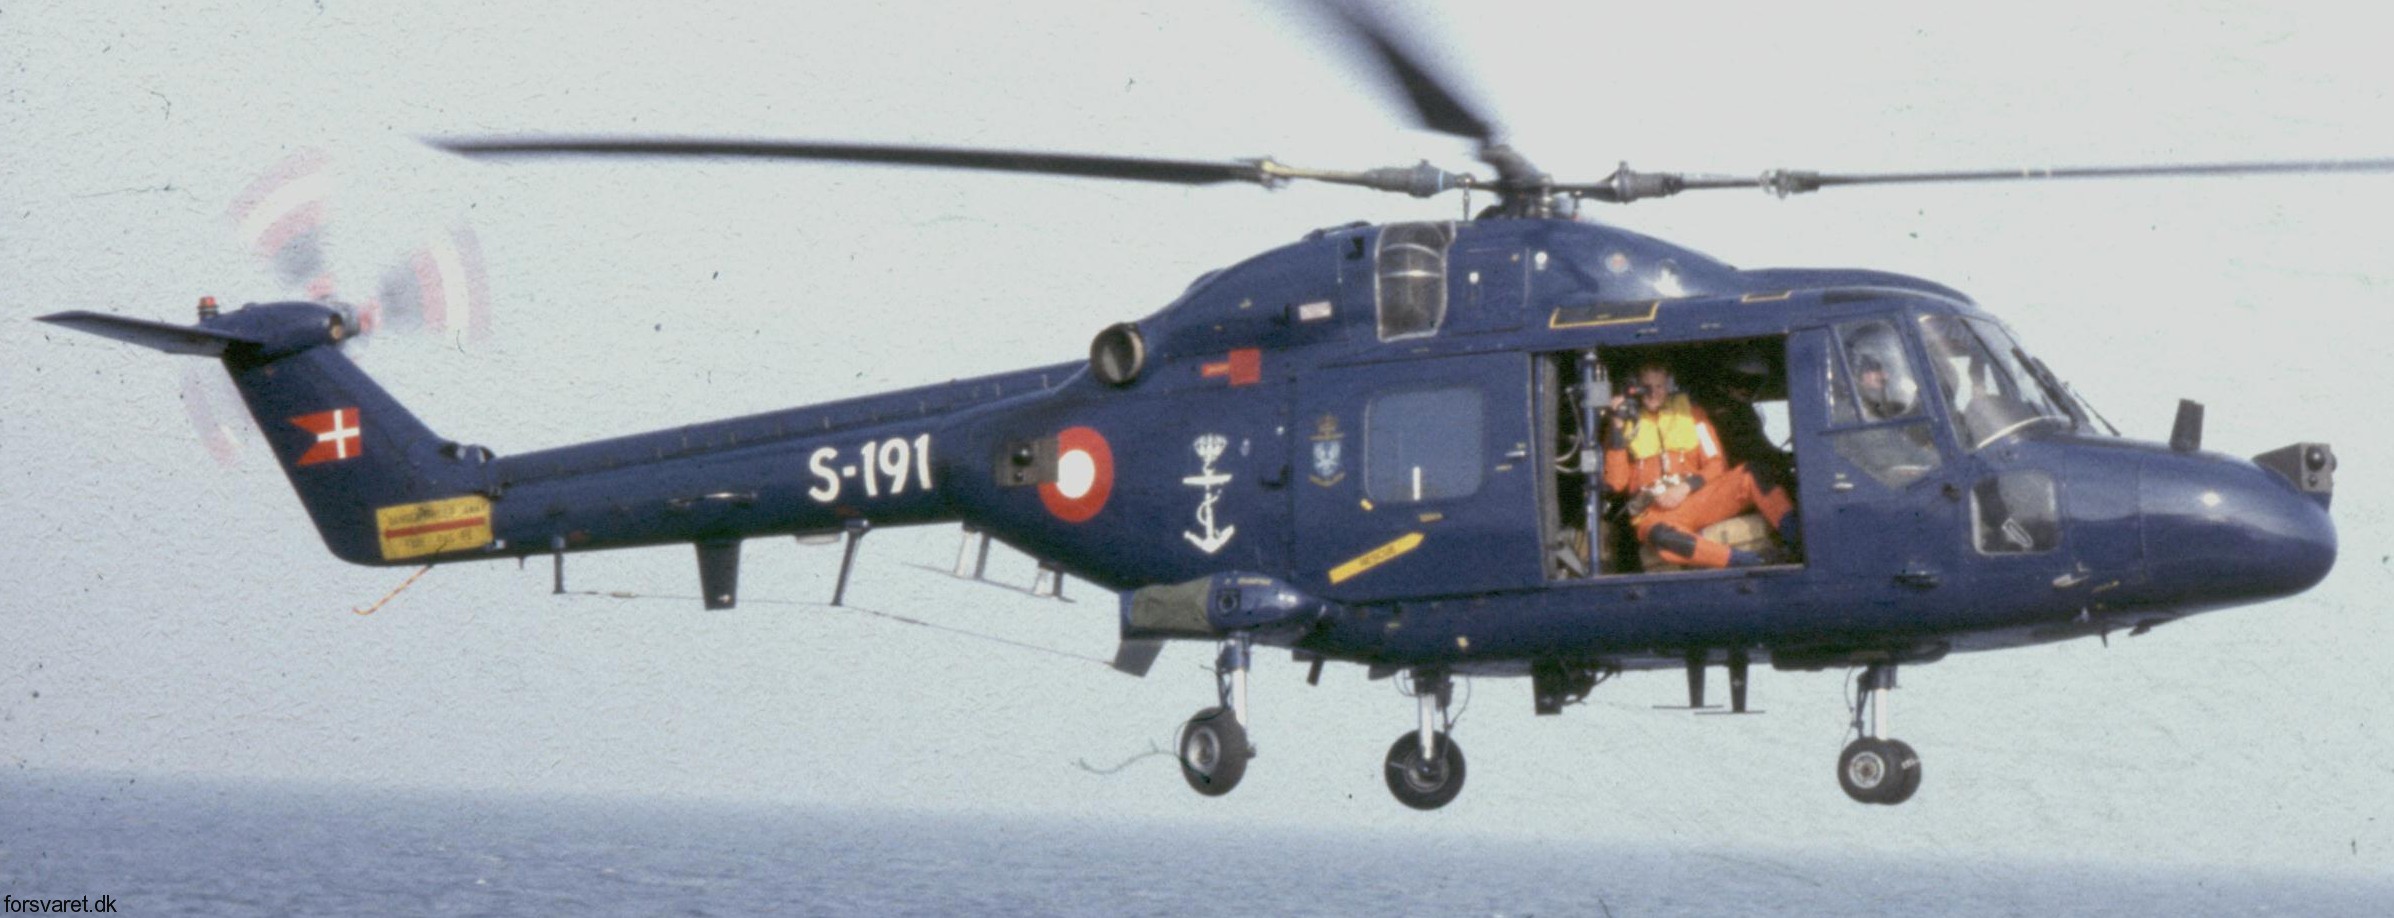 lynx mk.80 mk.90b helicopter westland royal danish navy air force kongelige danske marine flyvevabnet s-191 16